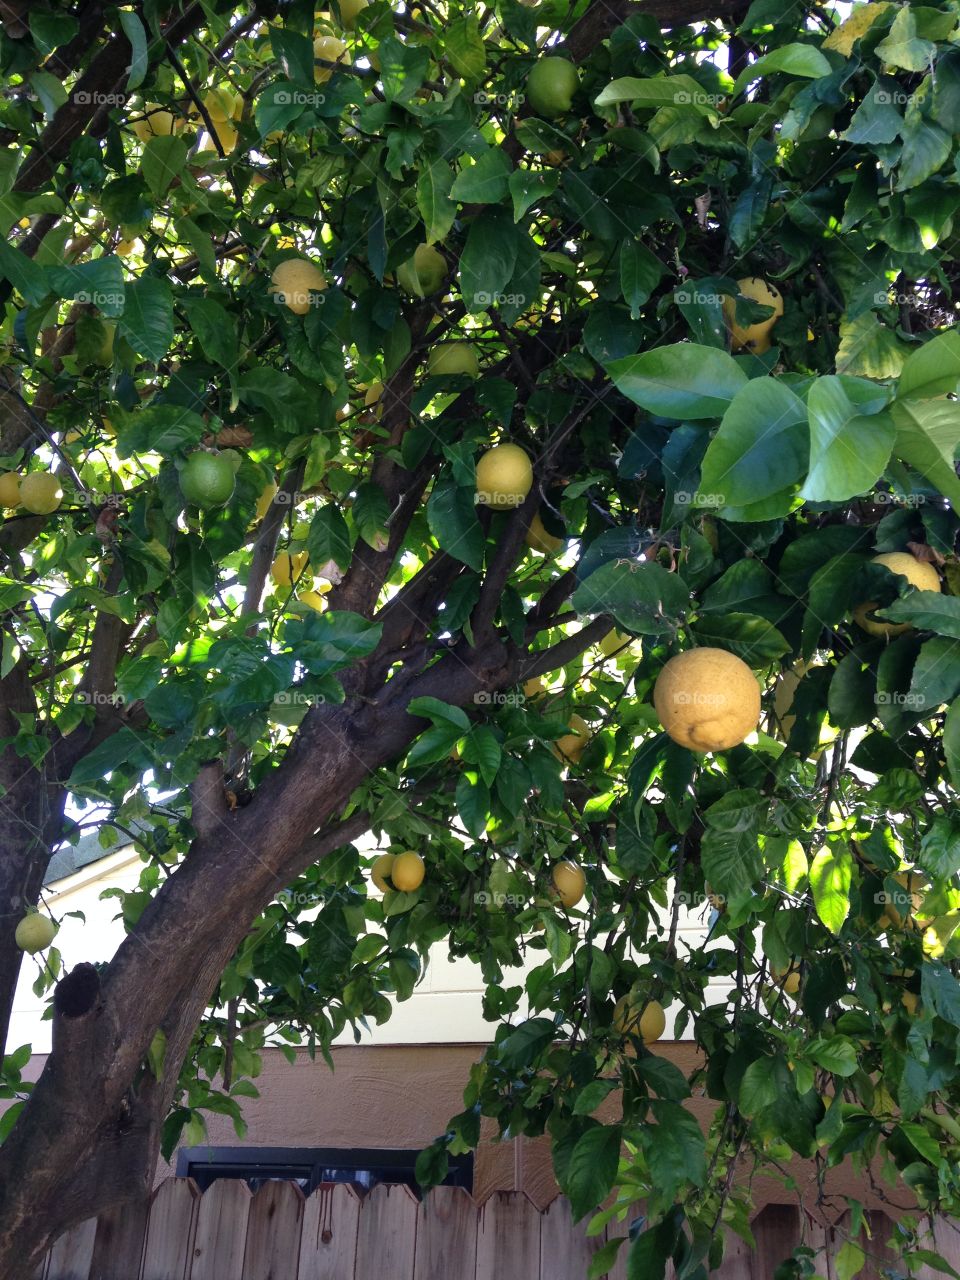 The lemon tree at my new house!